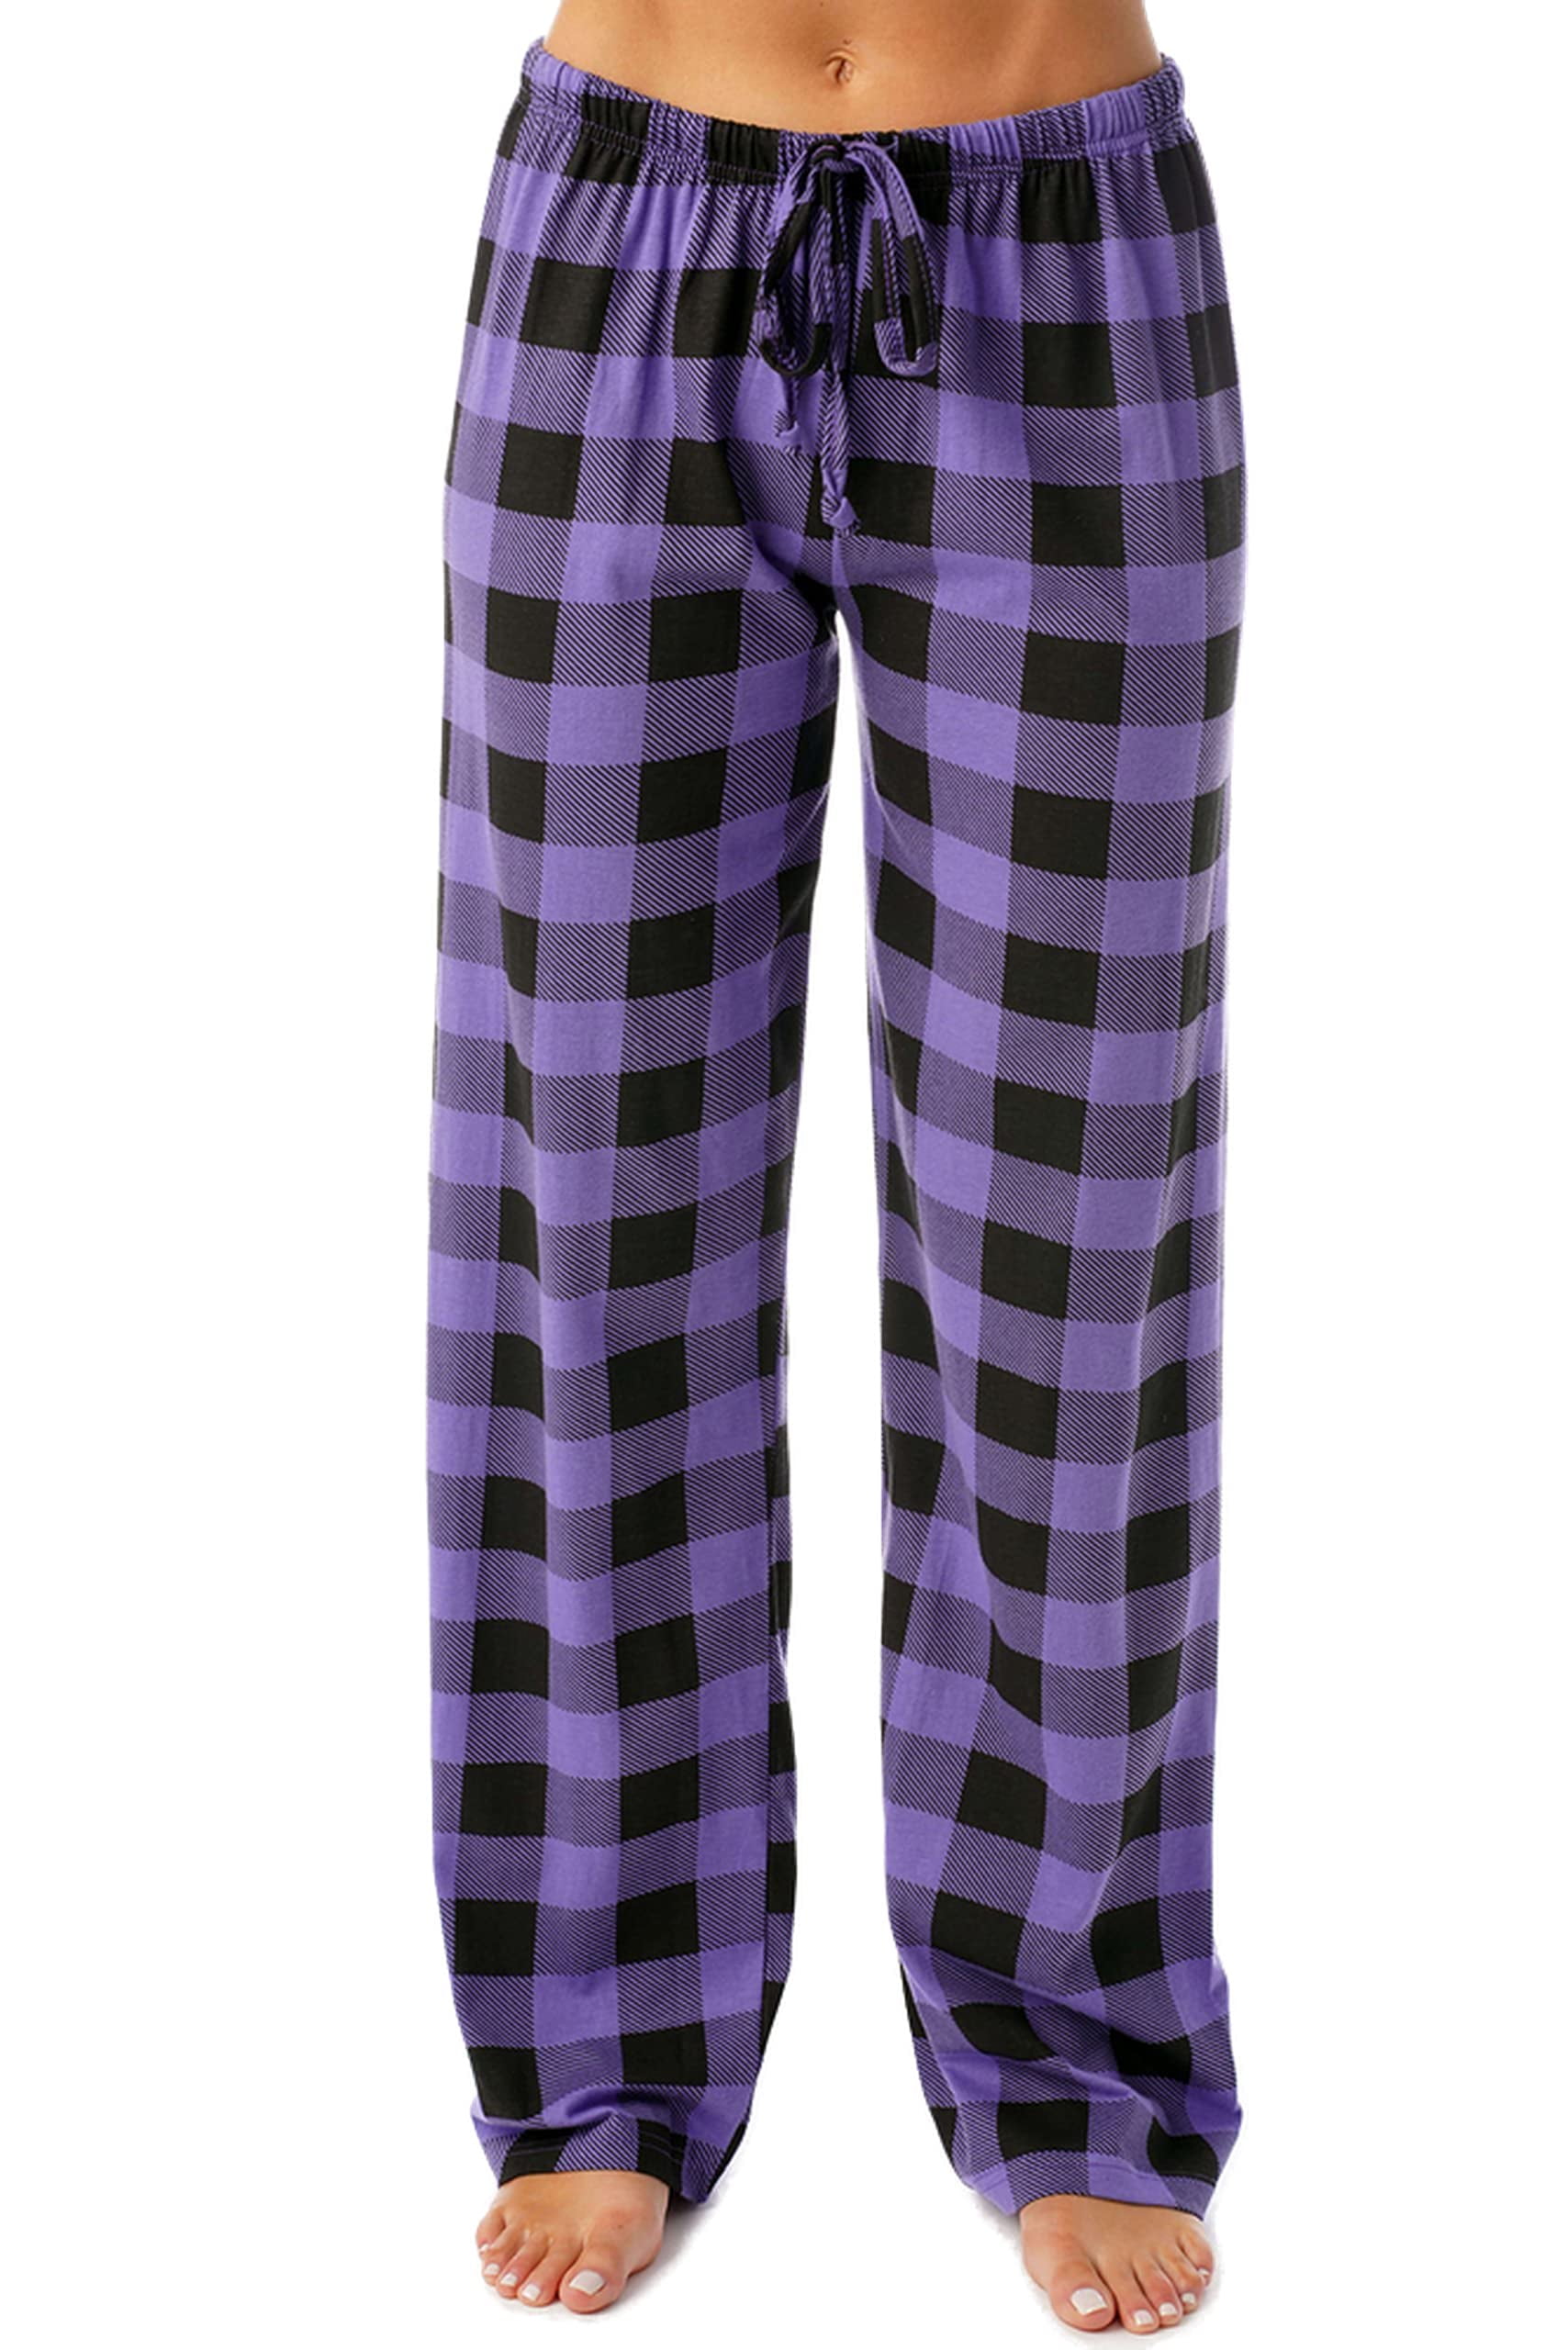 Just Love Women Buffalo Plaid Pajama Pants Sleepwear. (Purple Black Buffalo  Plaid, X-Small)